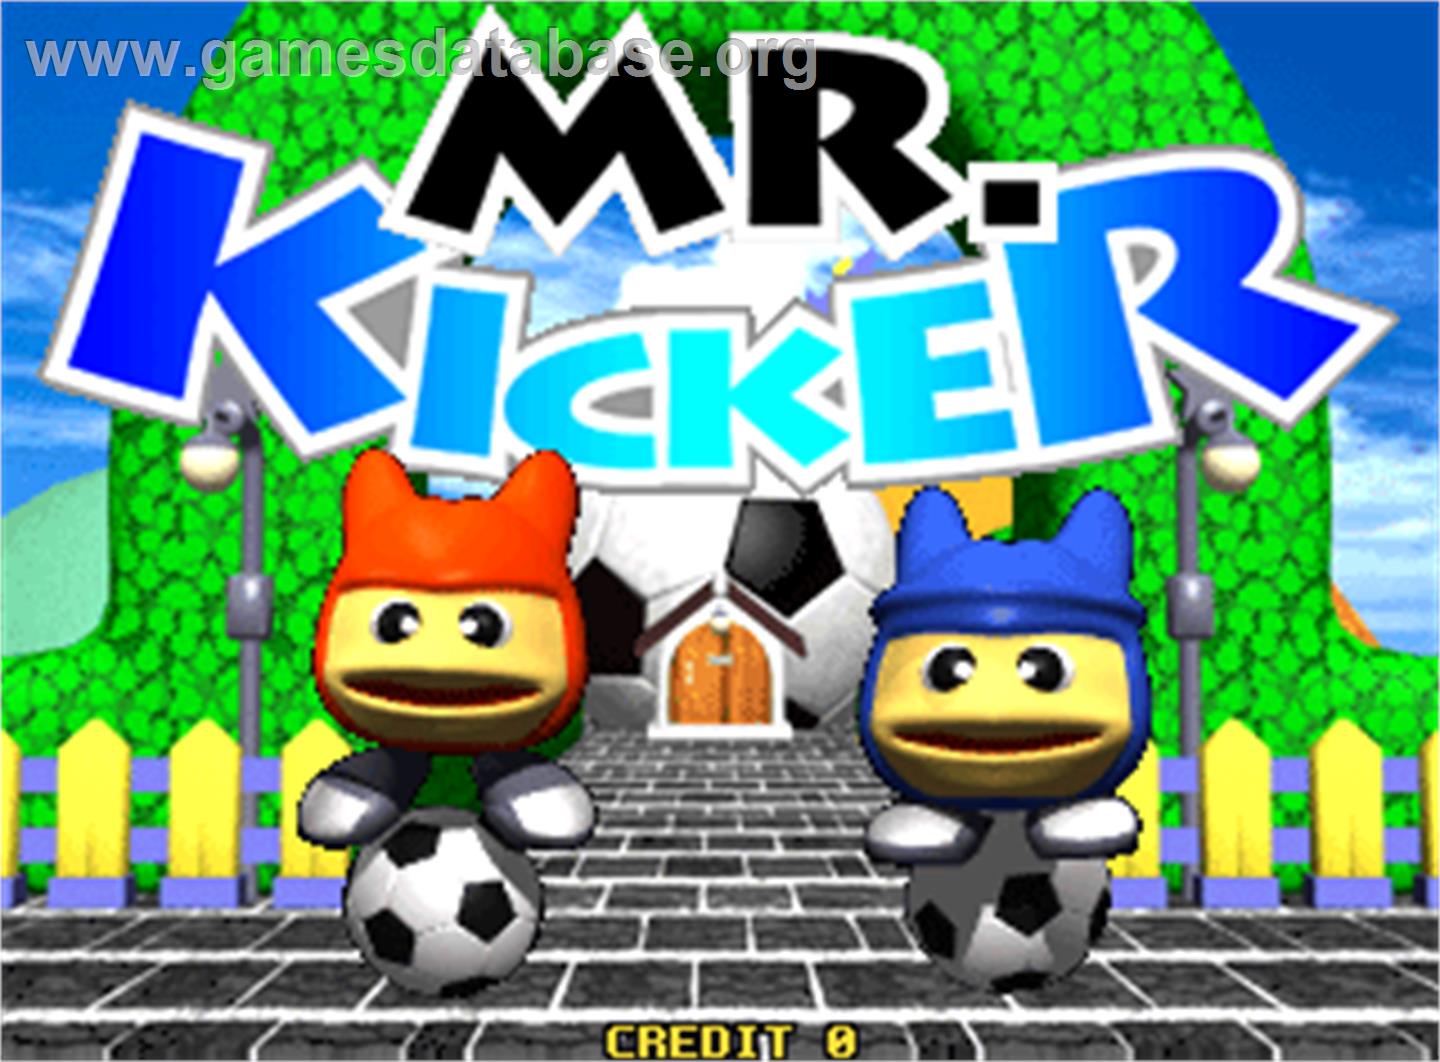 Mr. Kicker - Arcade - Artwork - Title Screen